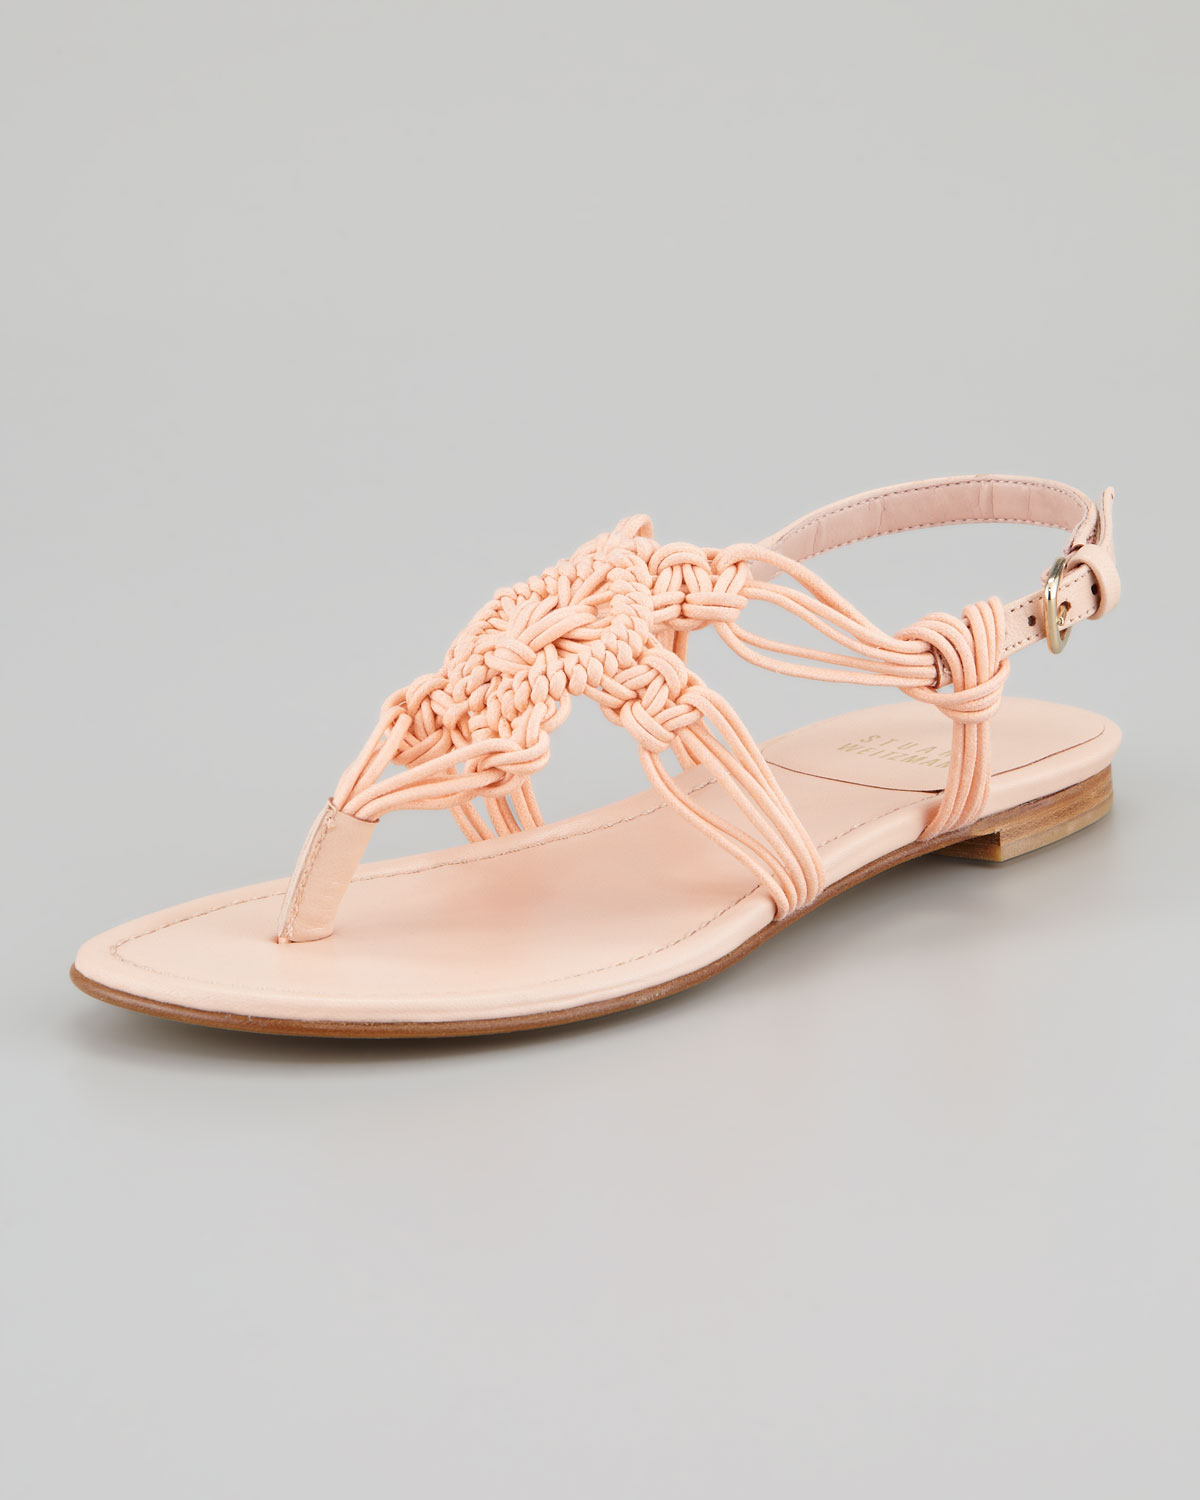 Lyst - Stuart Weitzman Alfresco Corded Flat Thong Sandal Peach in Pink